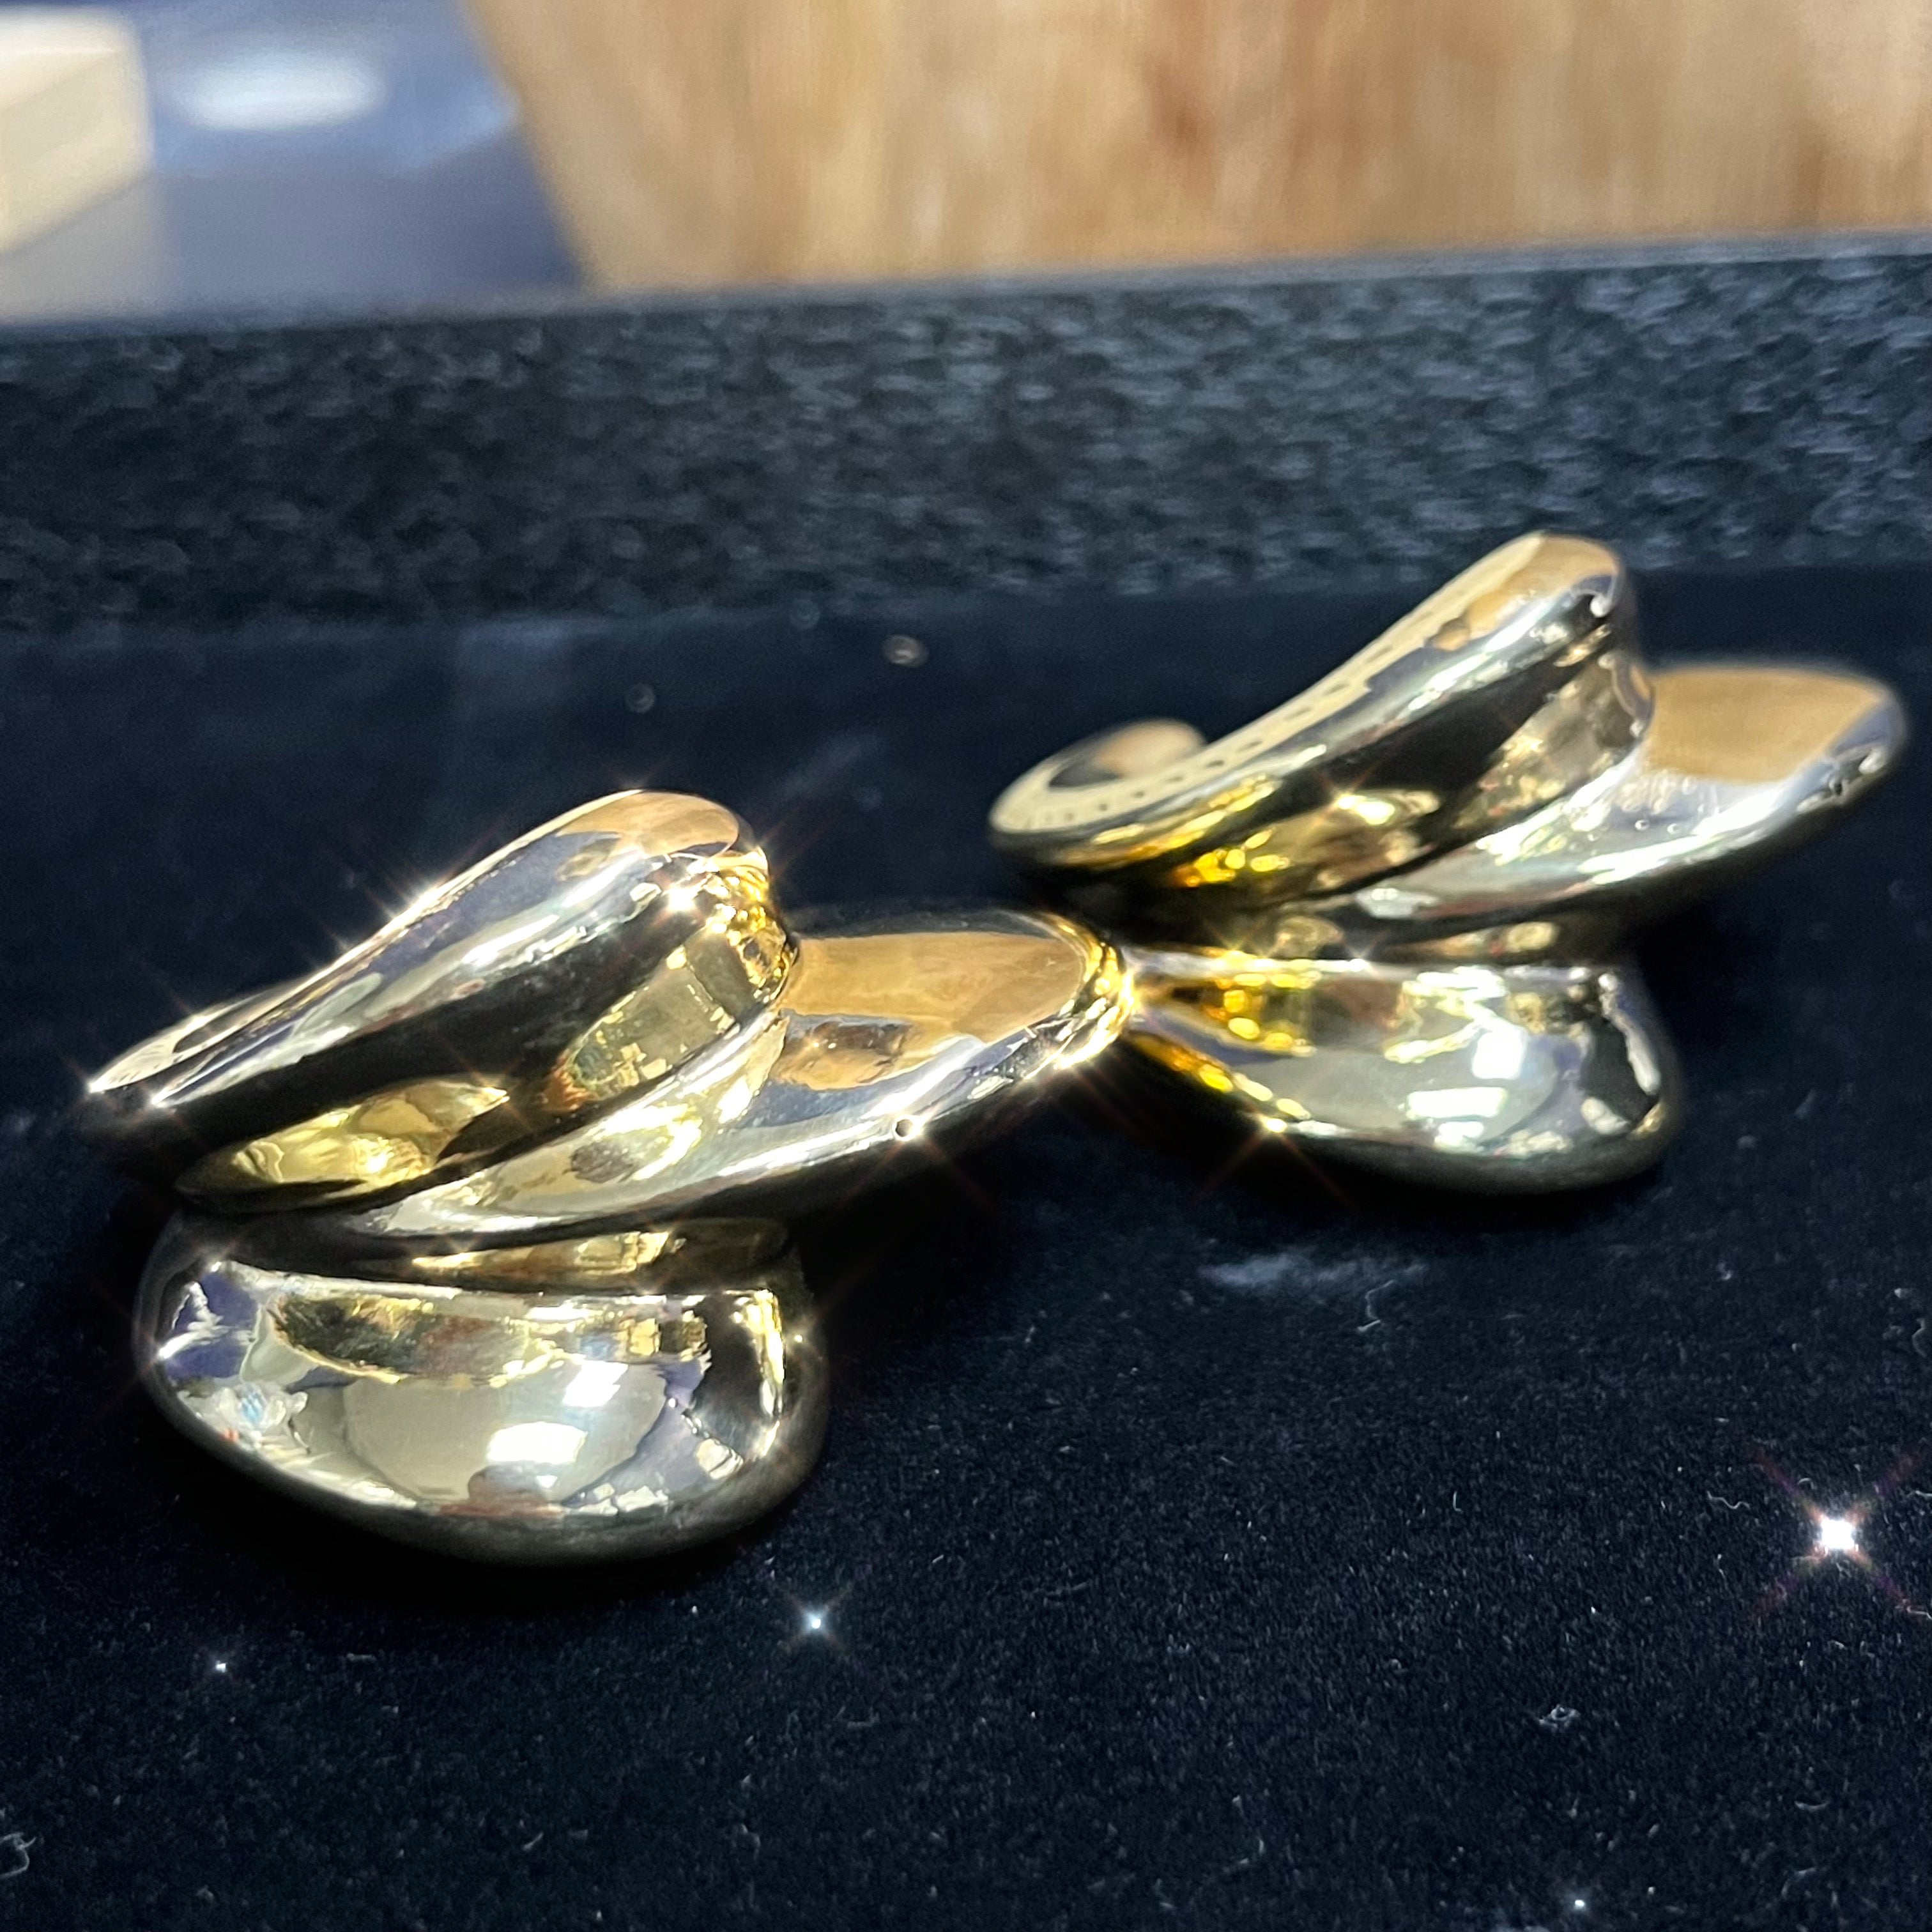 Amazing Figural 14K Yellow Gold Puffy Sleek Hoop Earrings